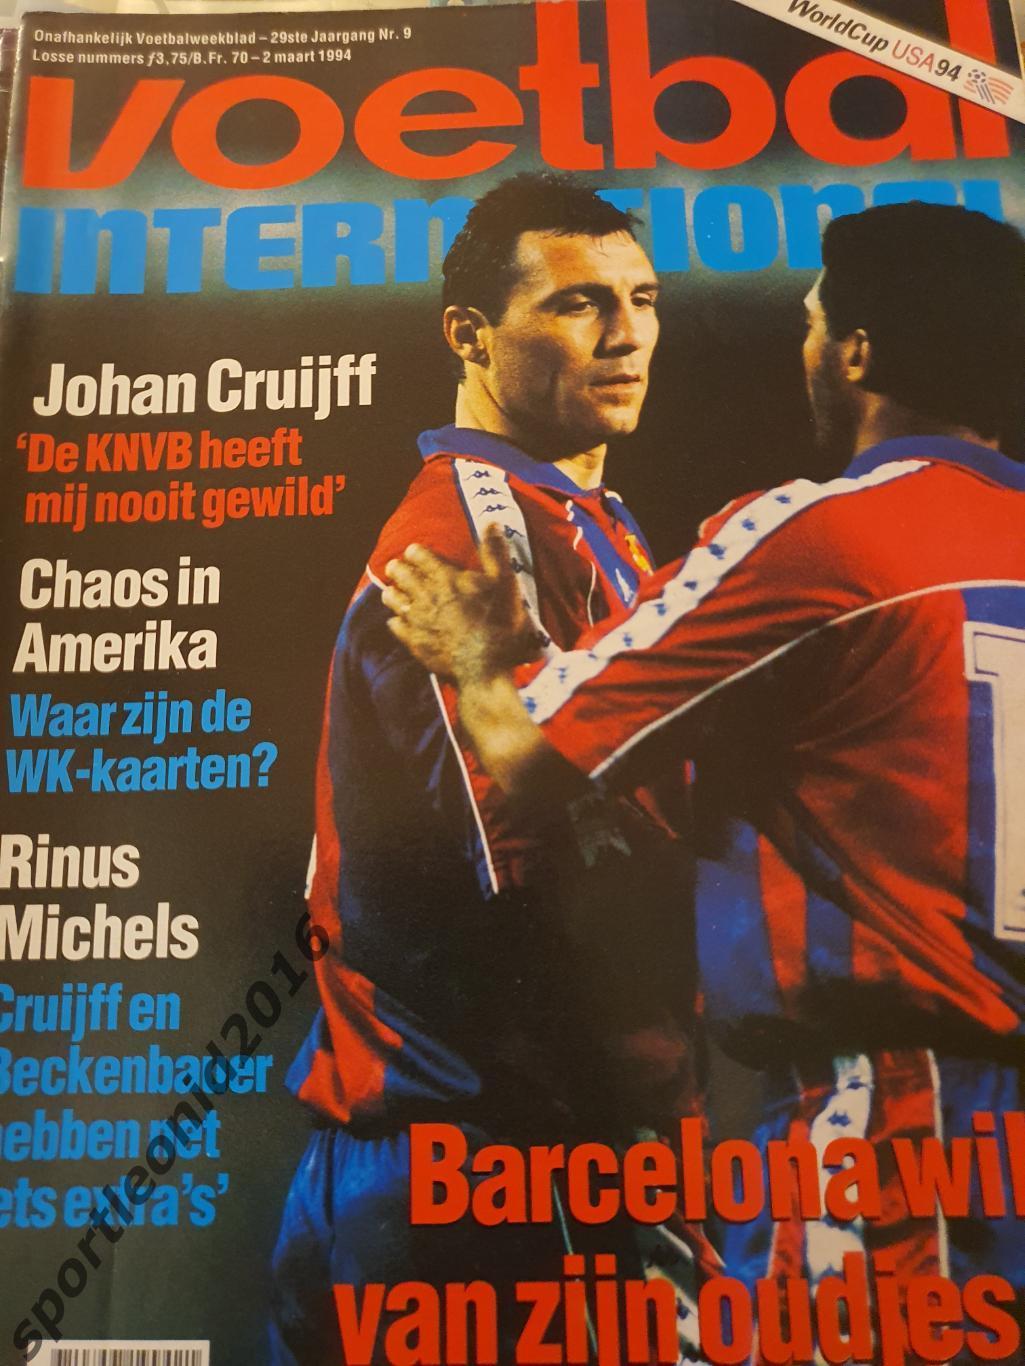 Voetbal International 1992-1994-1996 годов выпуска.12 журналов.2 6